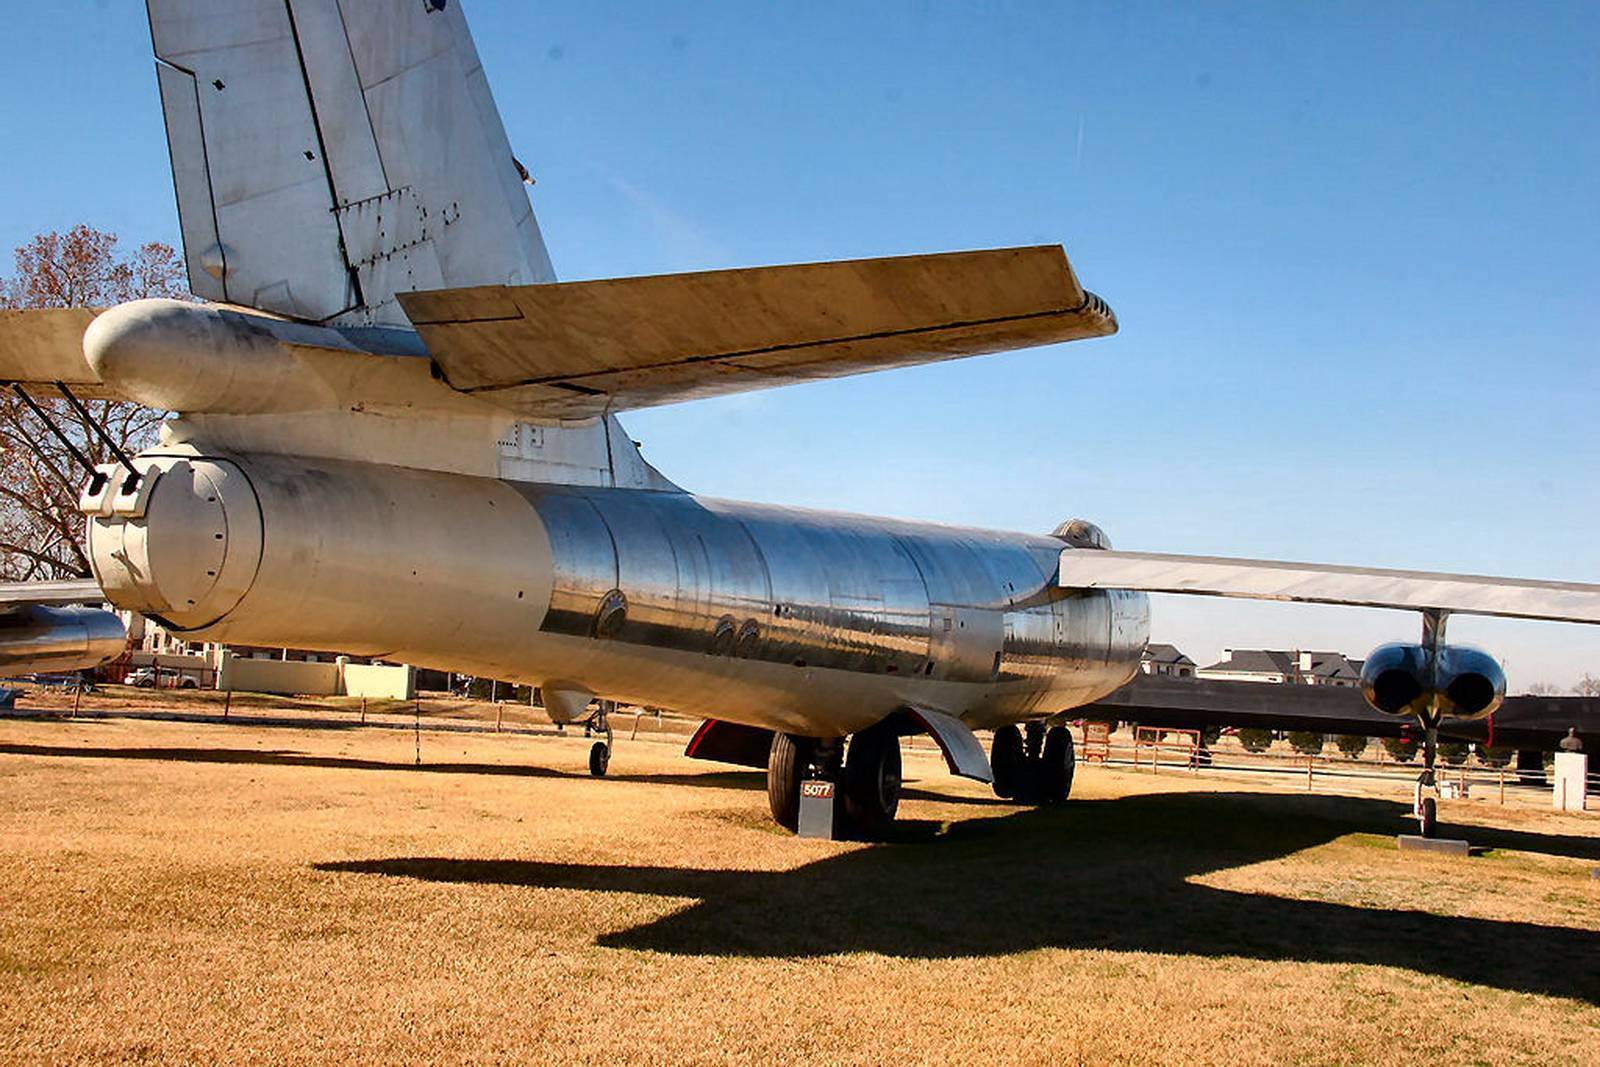 Boeing b-47 stratojet — википедия. что такое boeing b-47 stratojet